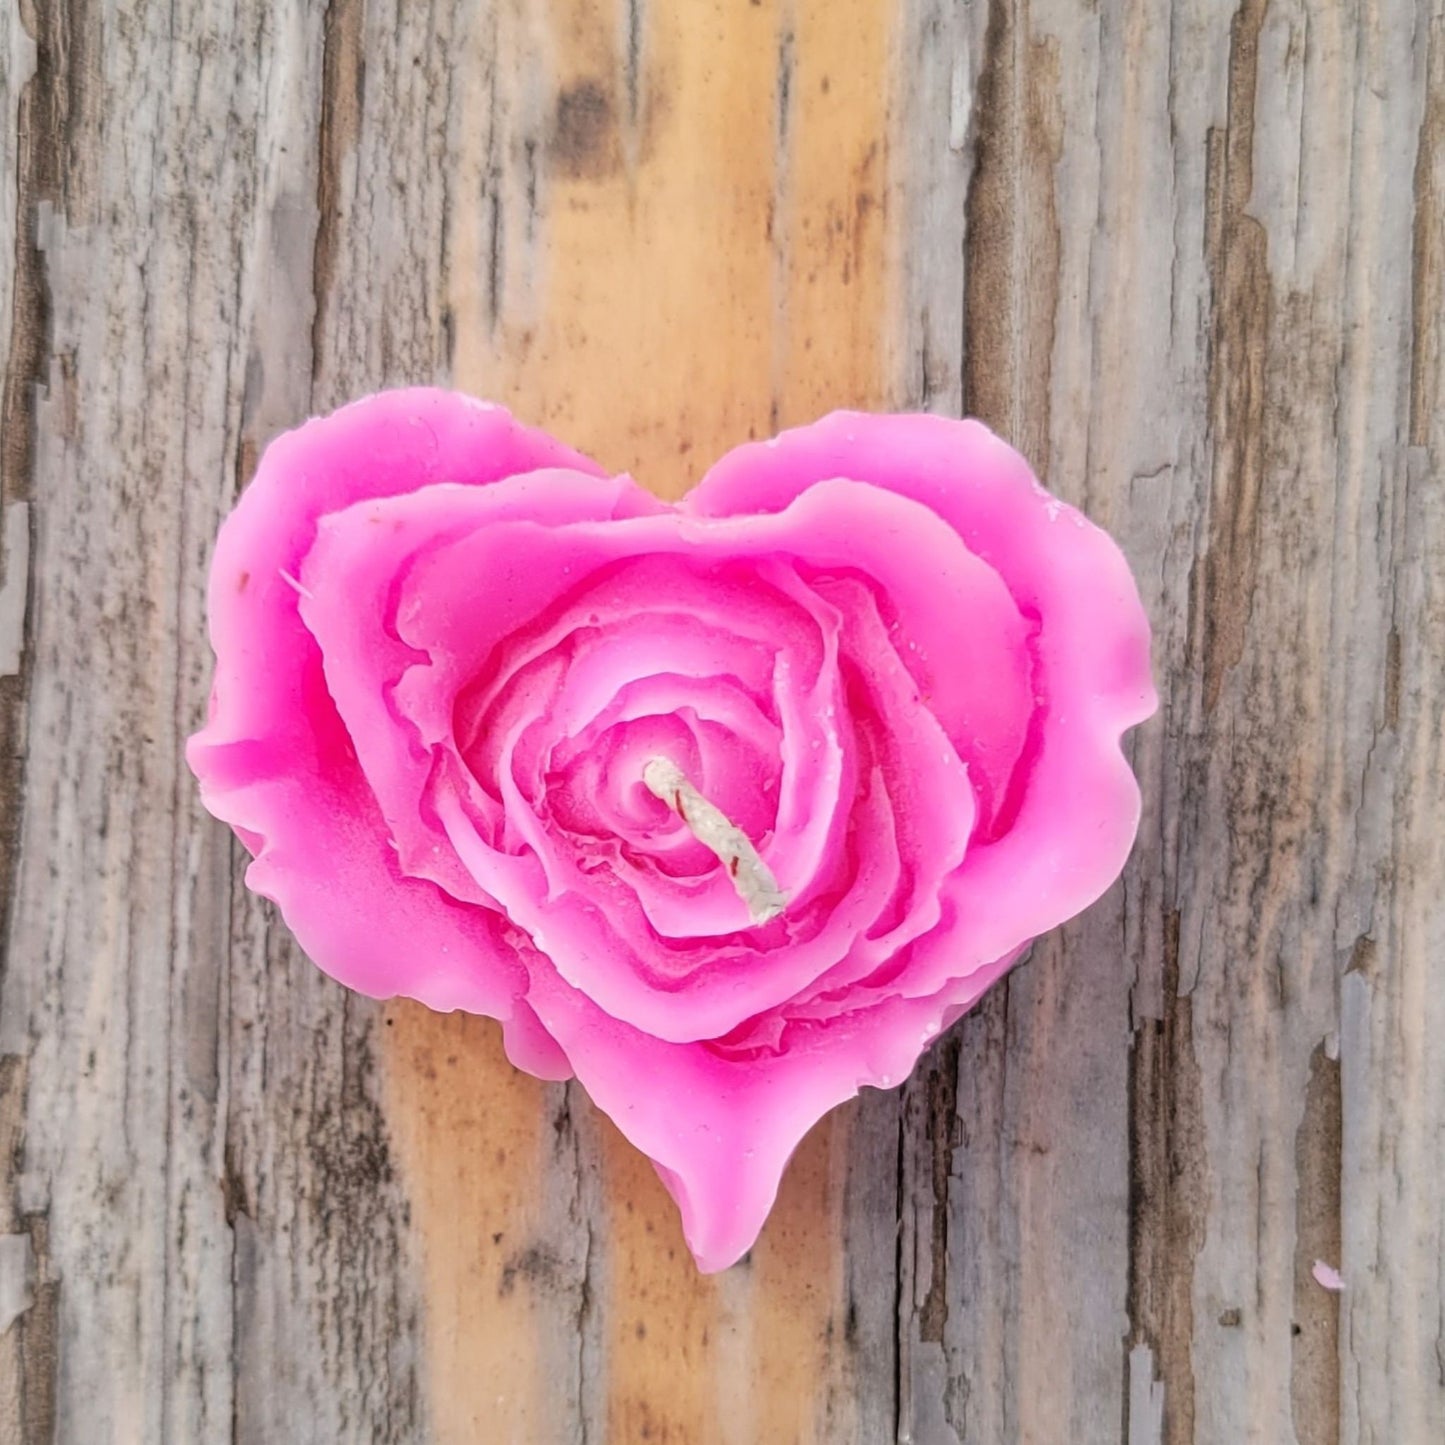 A handmade pink heart shaped flower votive candle.